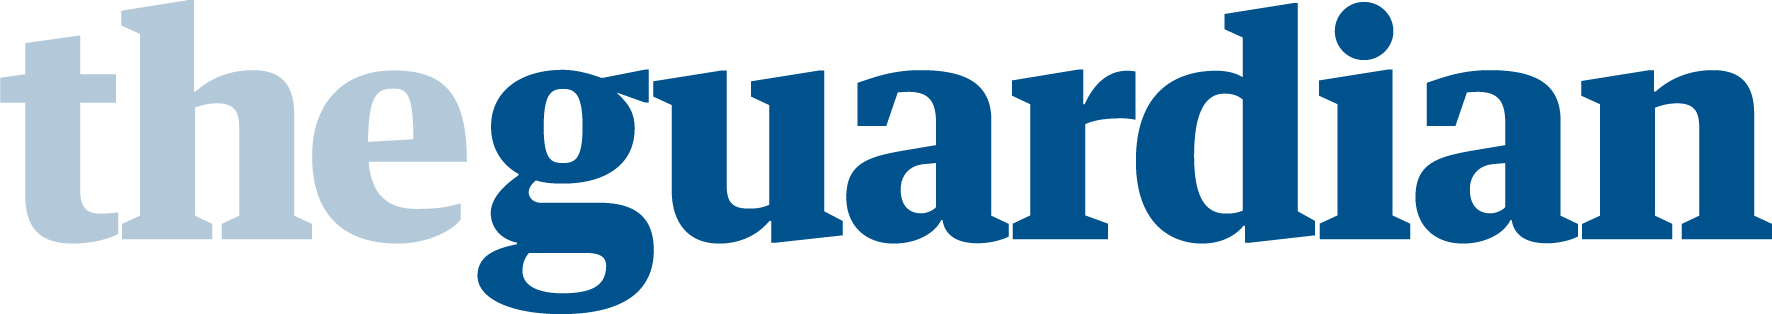 guardian-logo1